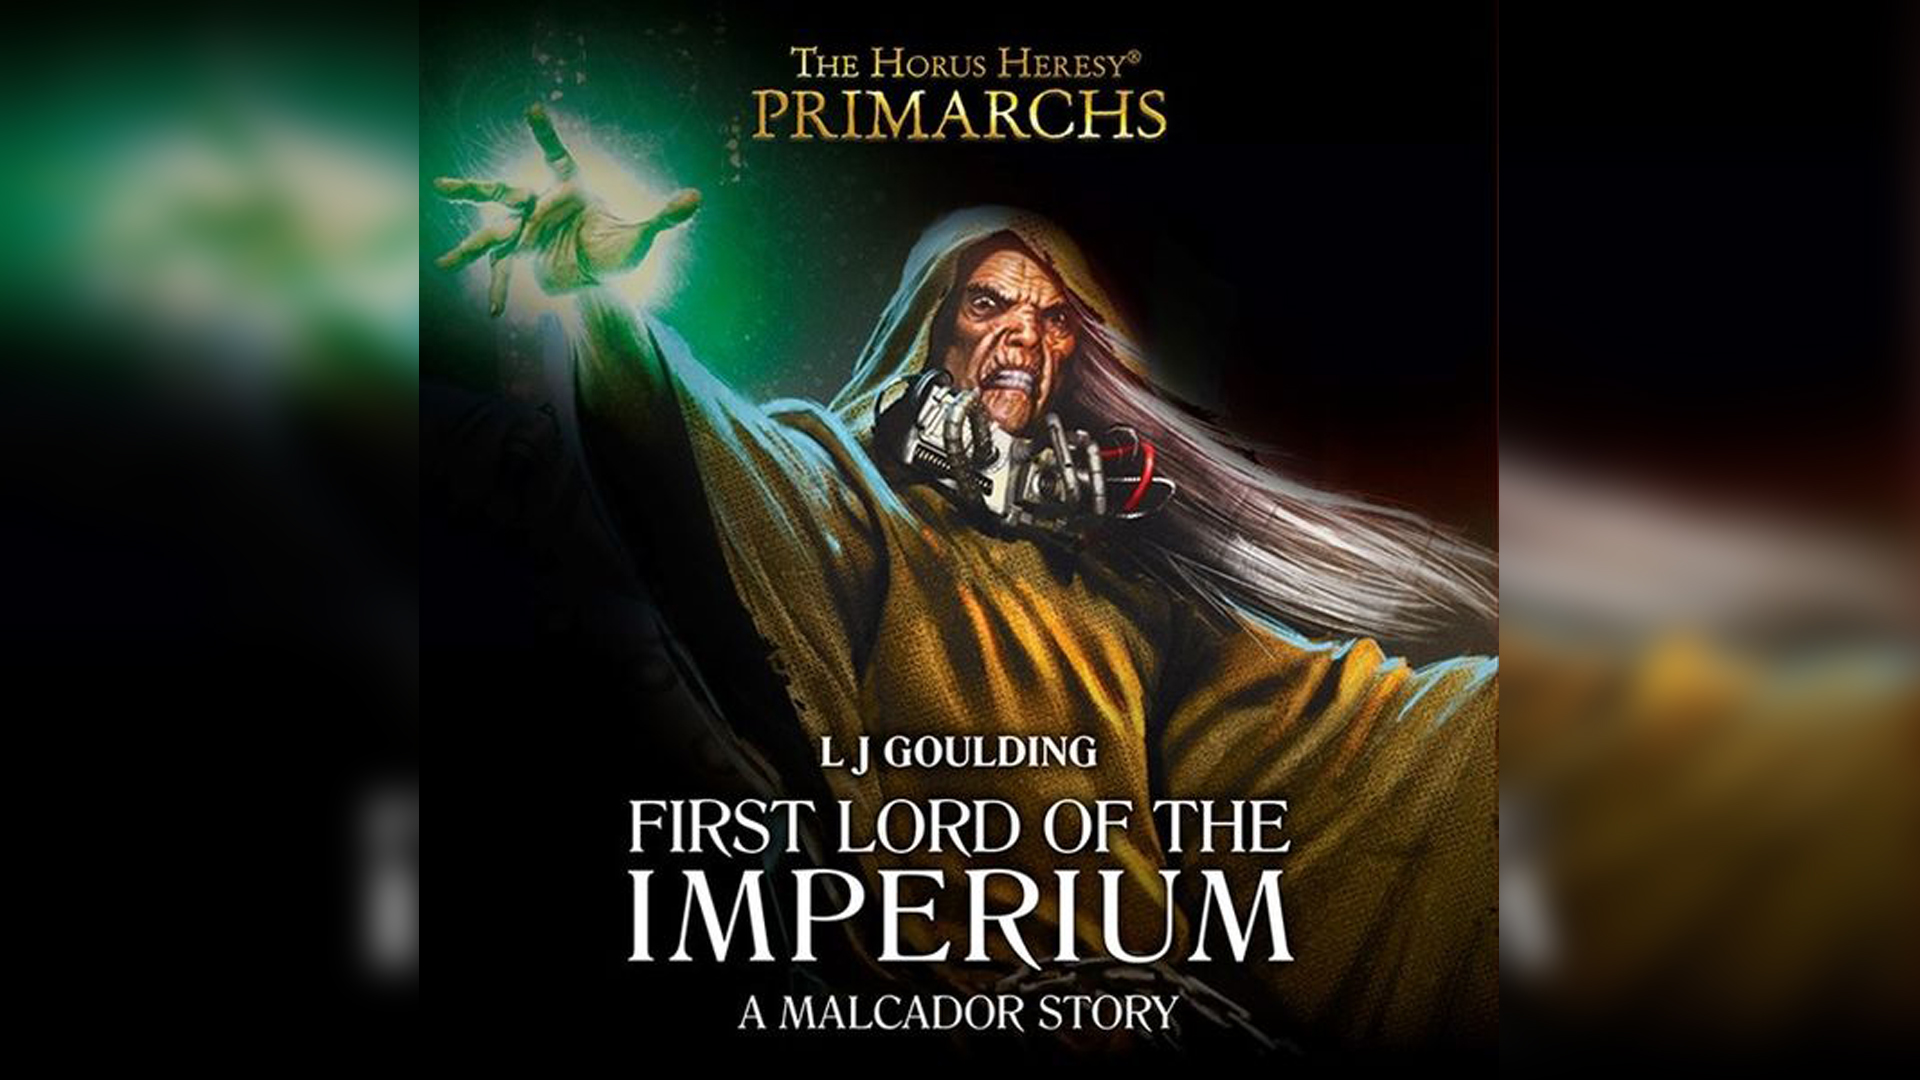 Первый лорд Империума - Лори Голдинг / L.J. Goulding - "Malcador: First Lord of the Imperium" (2017)